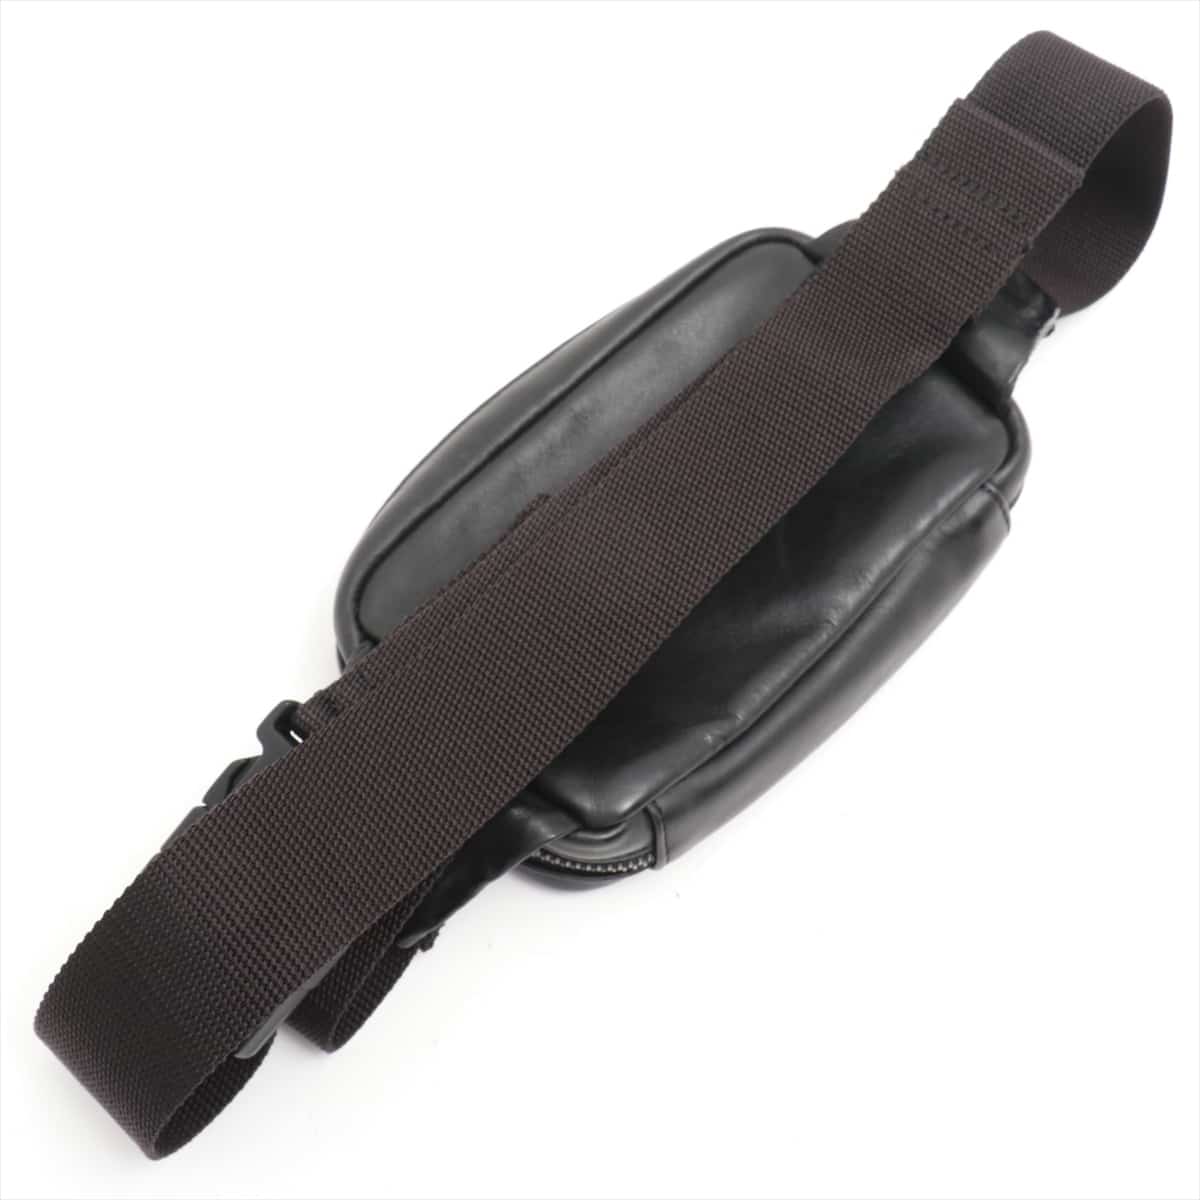 Maison Margiela Leather Waist bag Black S55WB0014